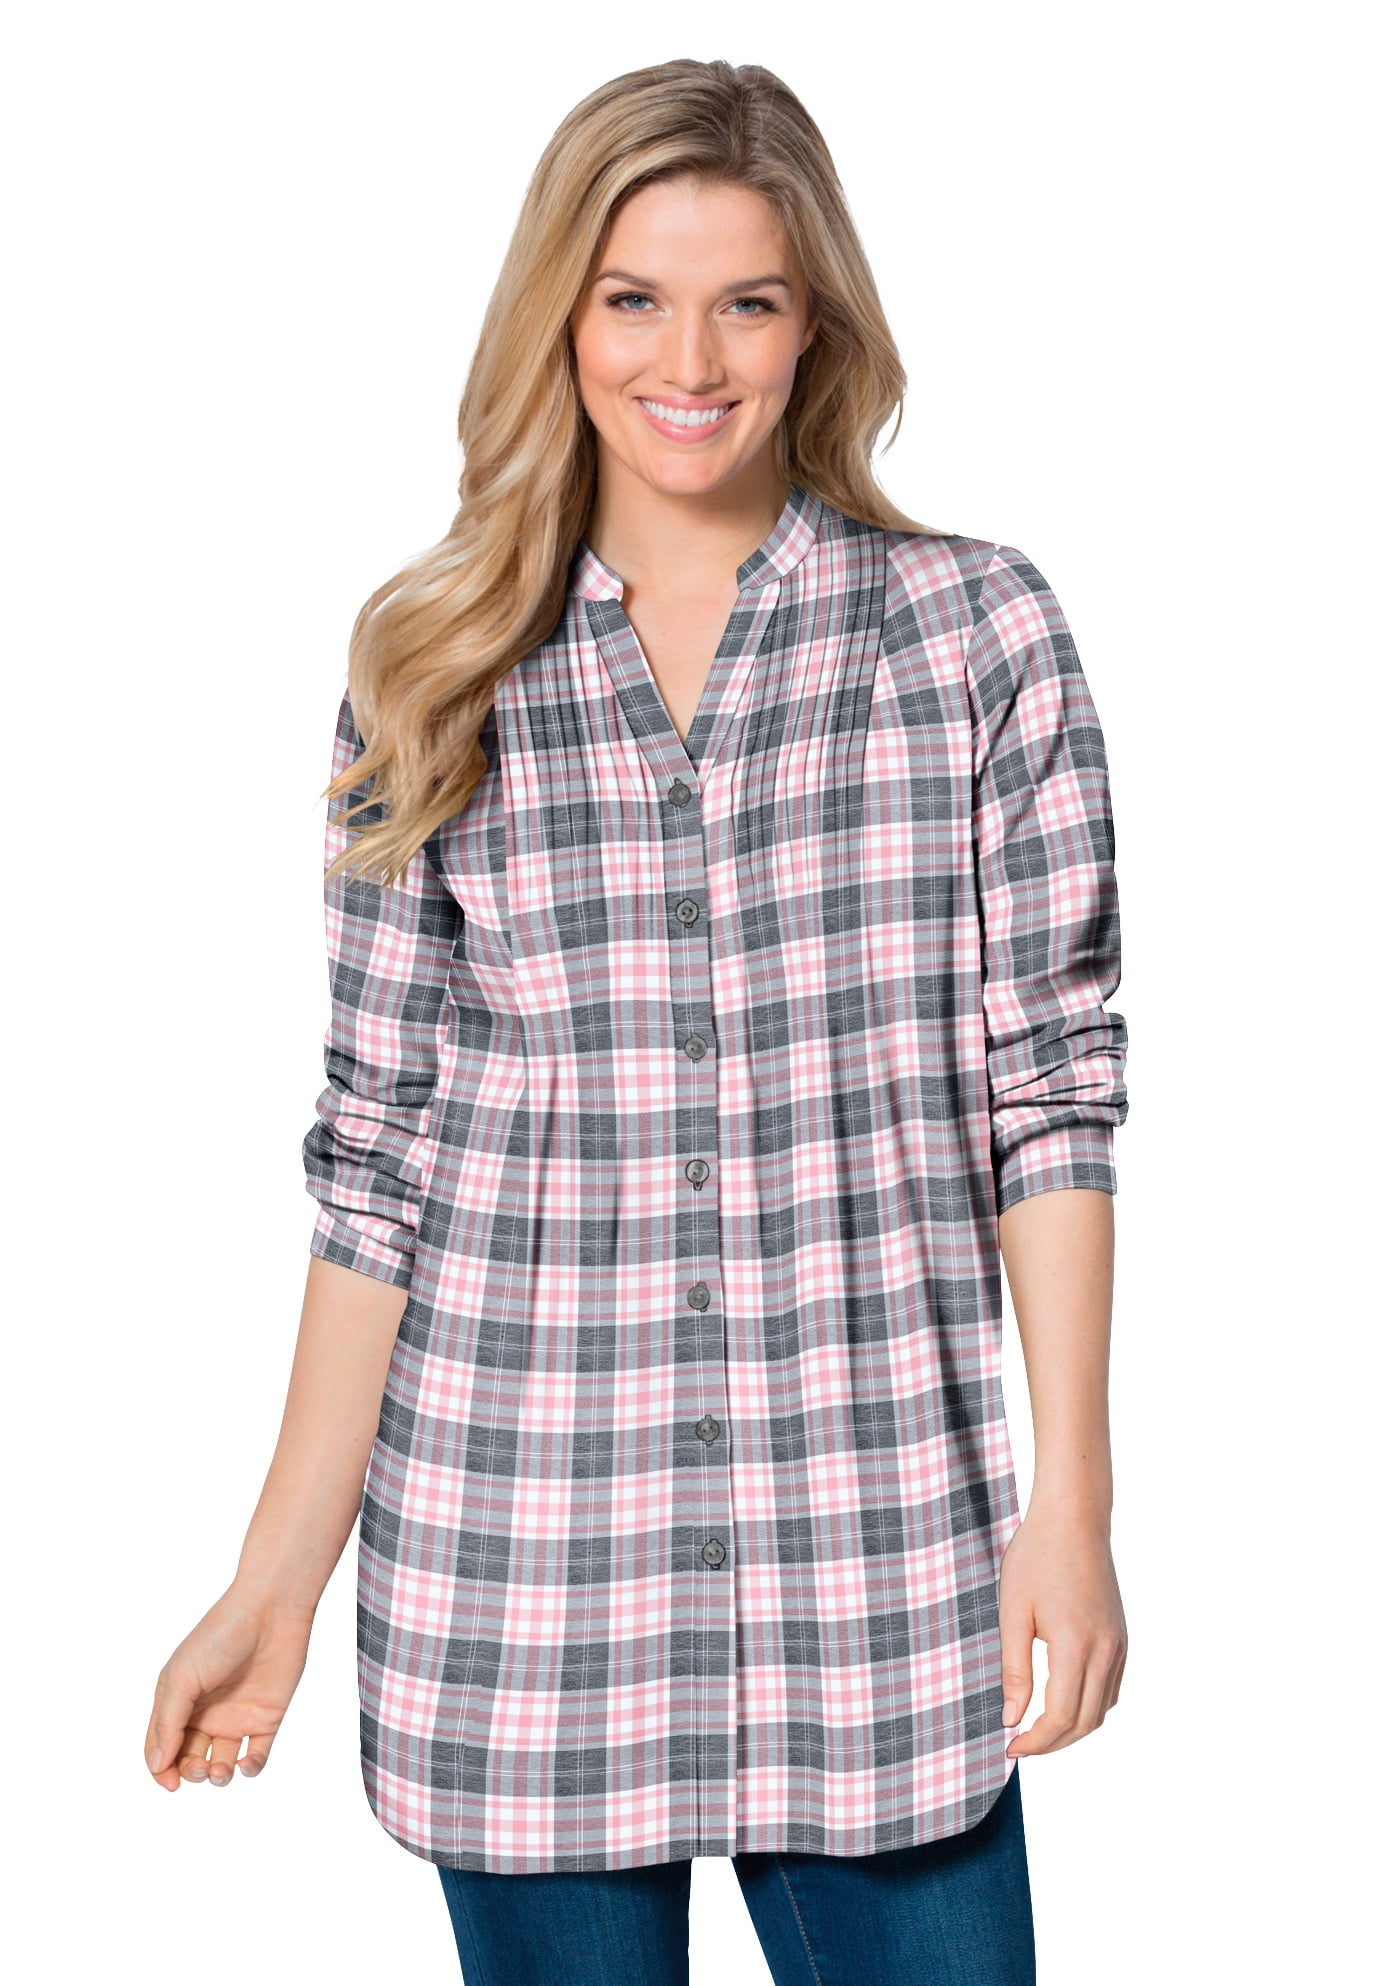 Womens Flannel Shirts Walmart